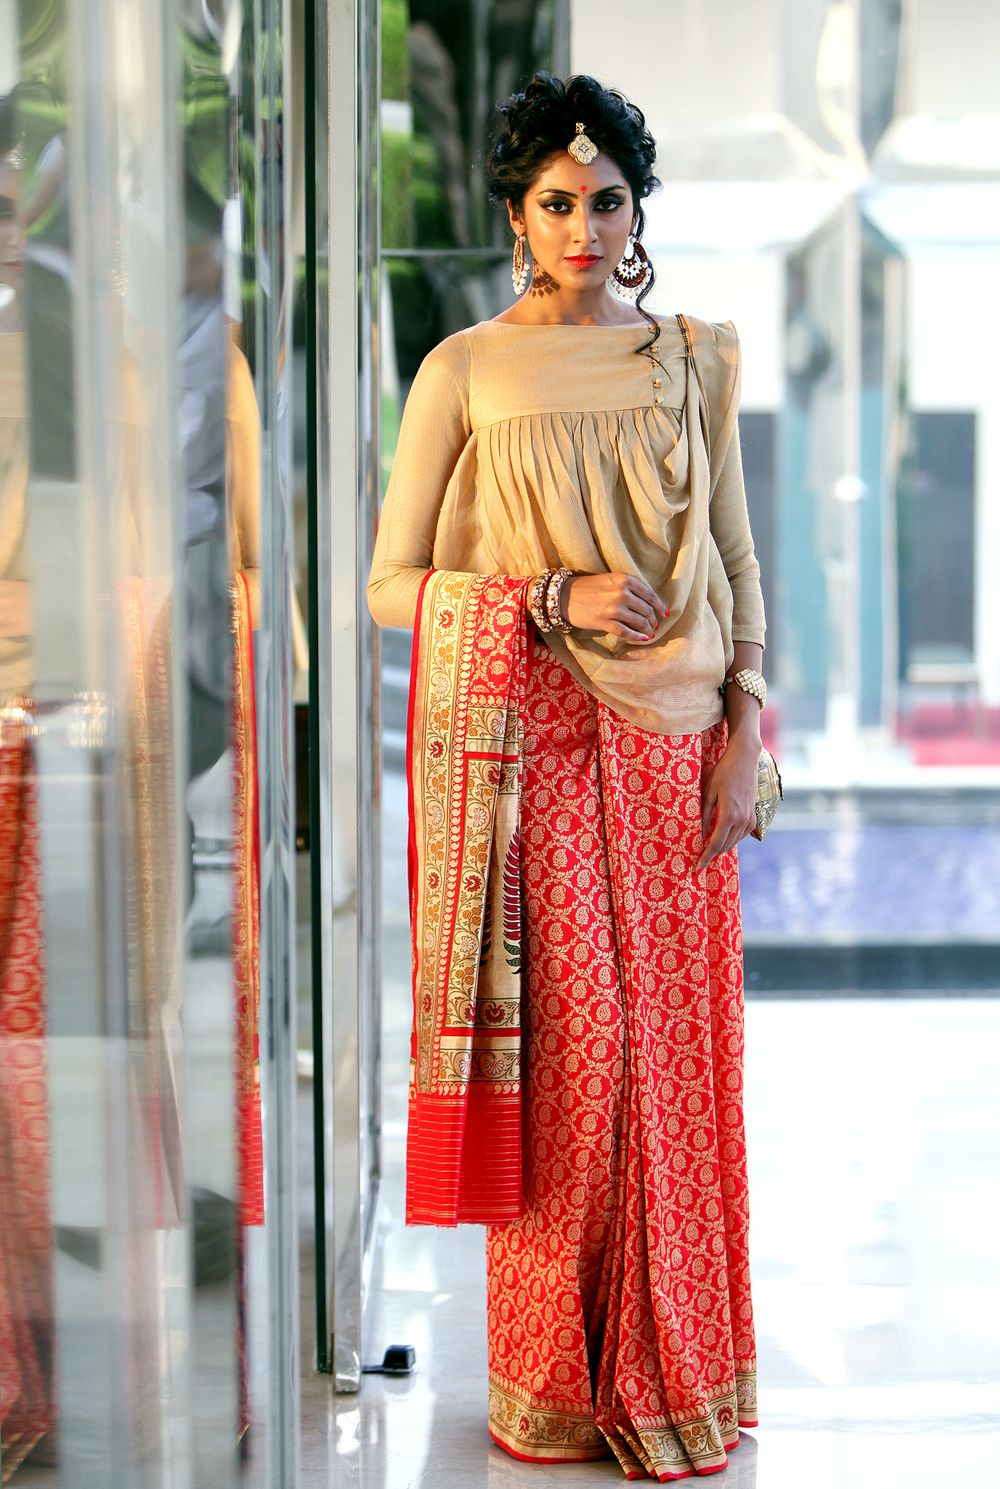 Photo of Unique blouse with draped design and orange saree